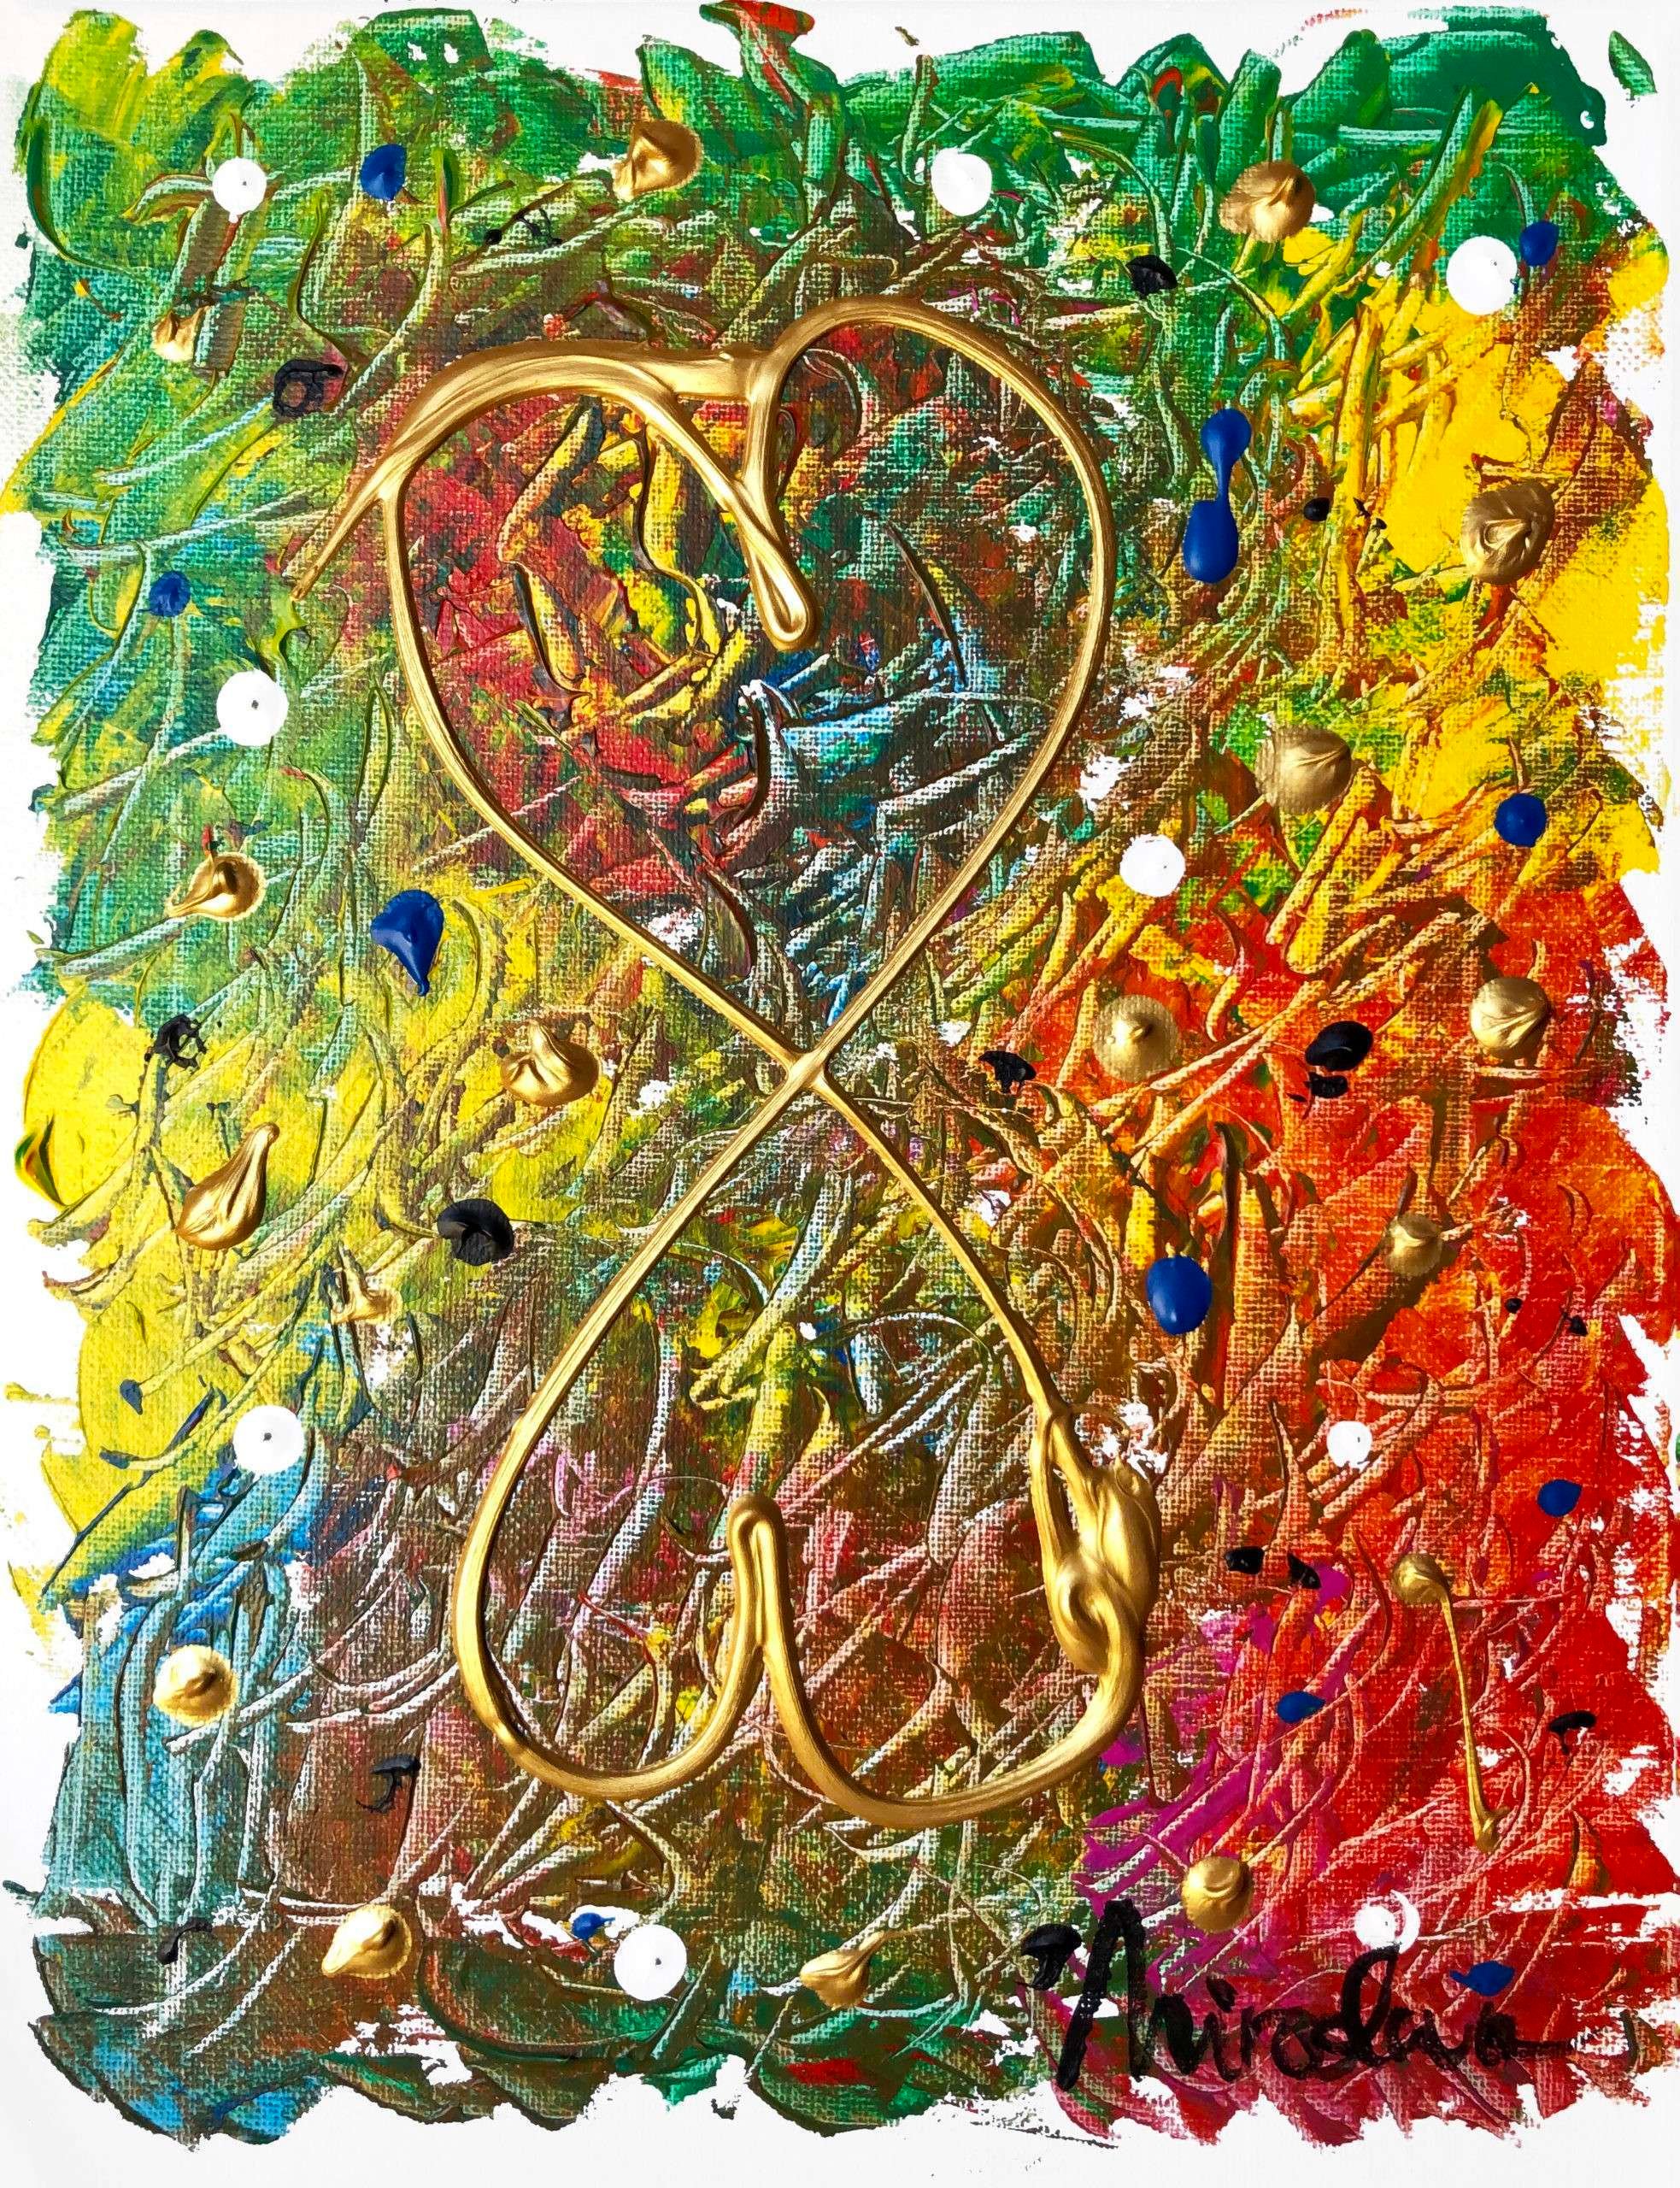 Pinturas de Miroslavo: Amor infinito